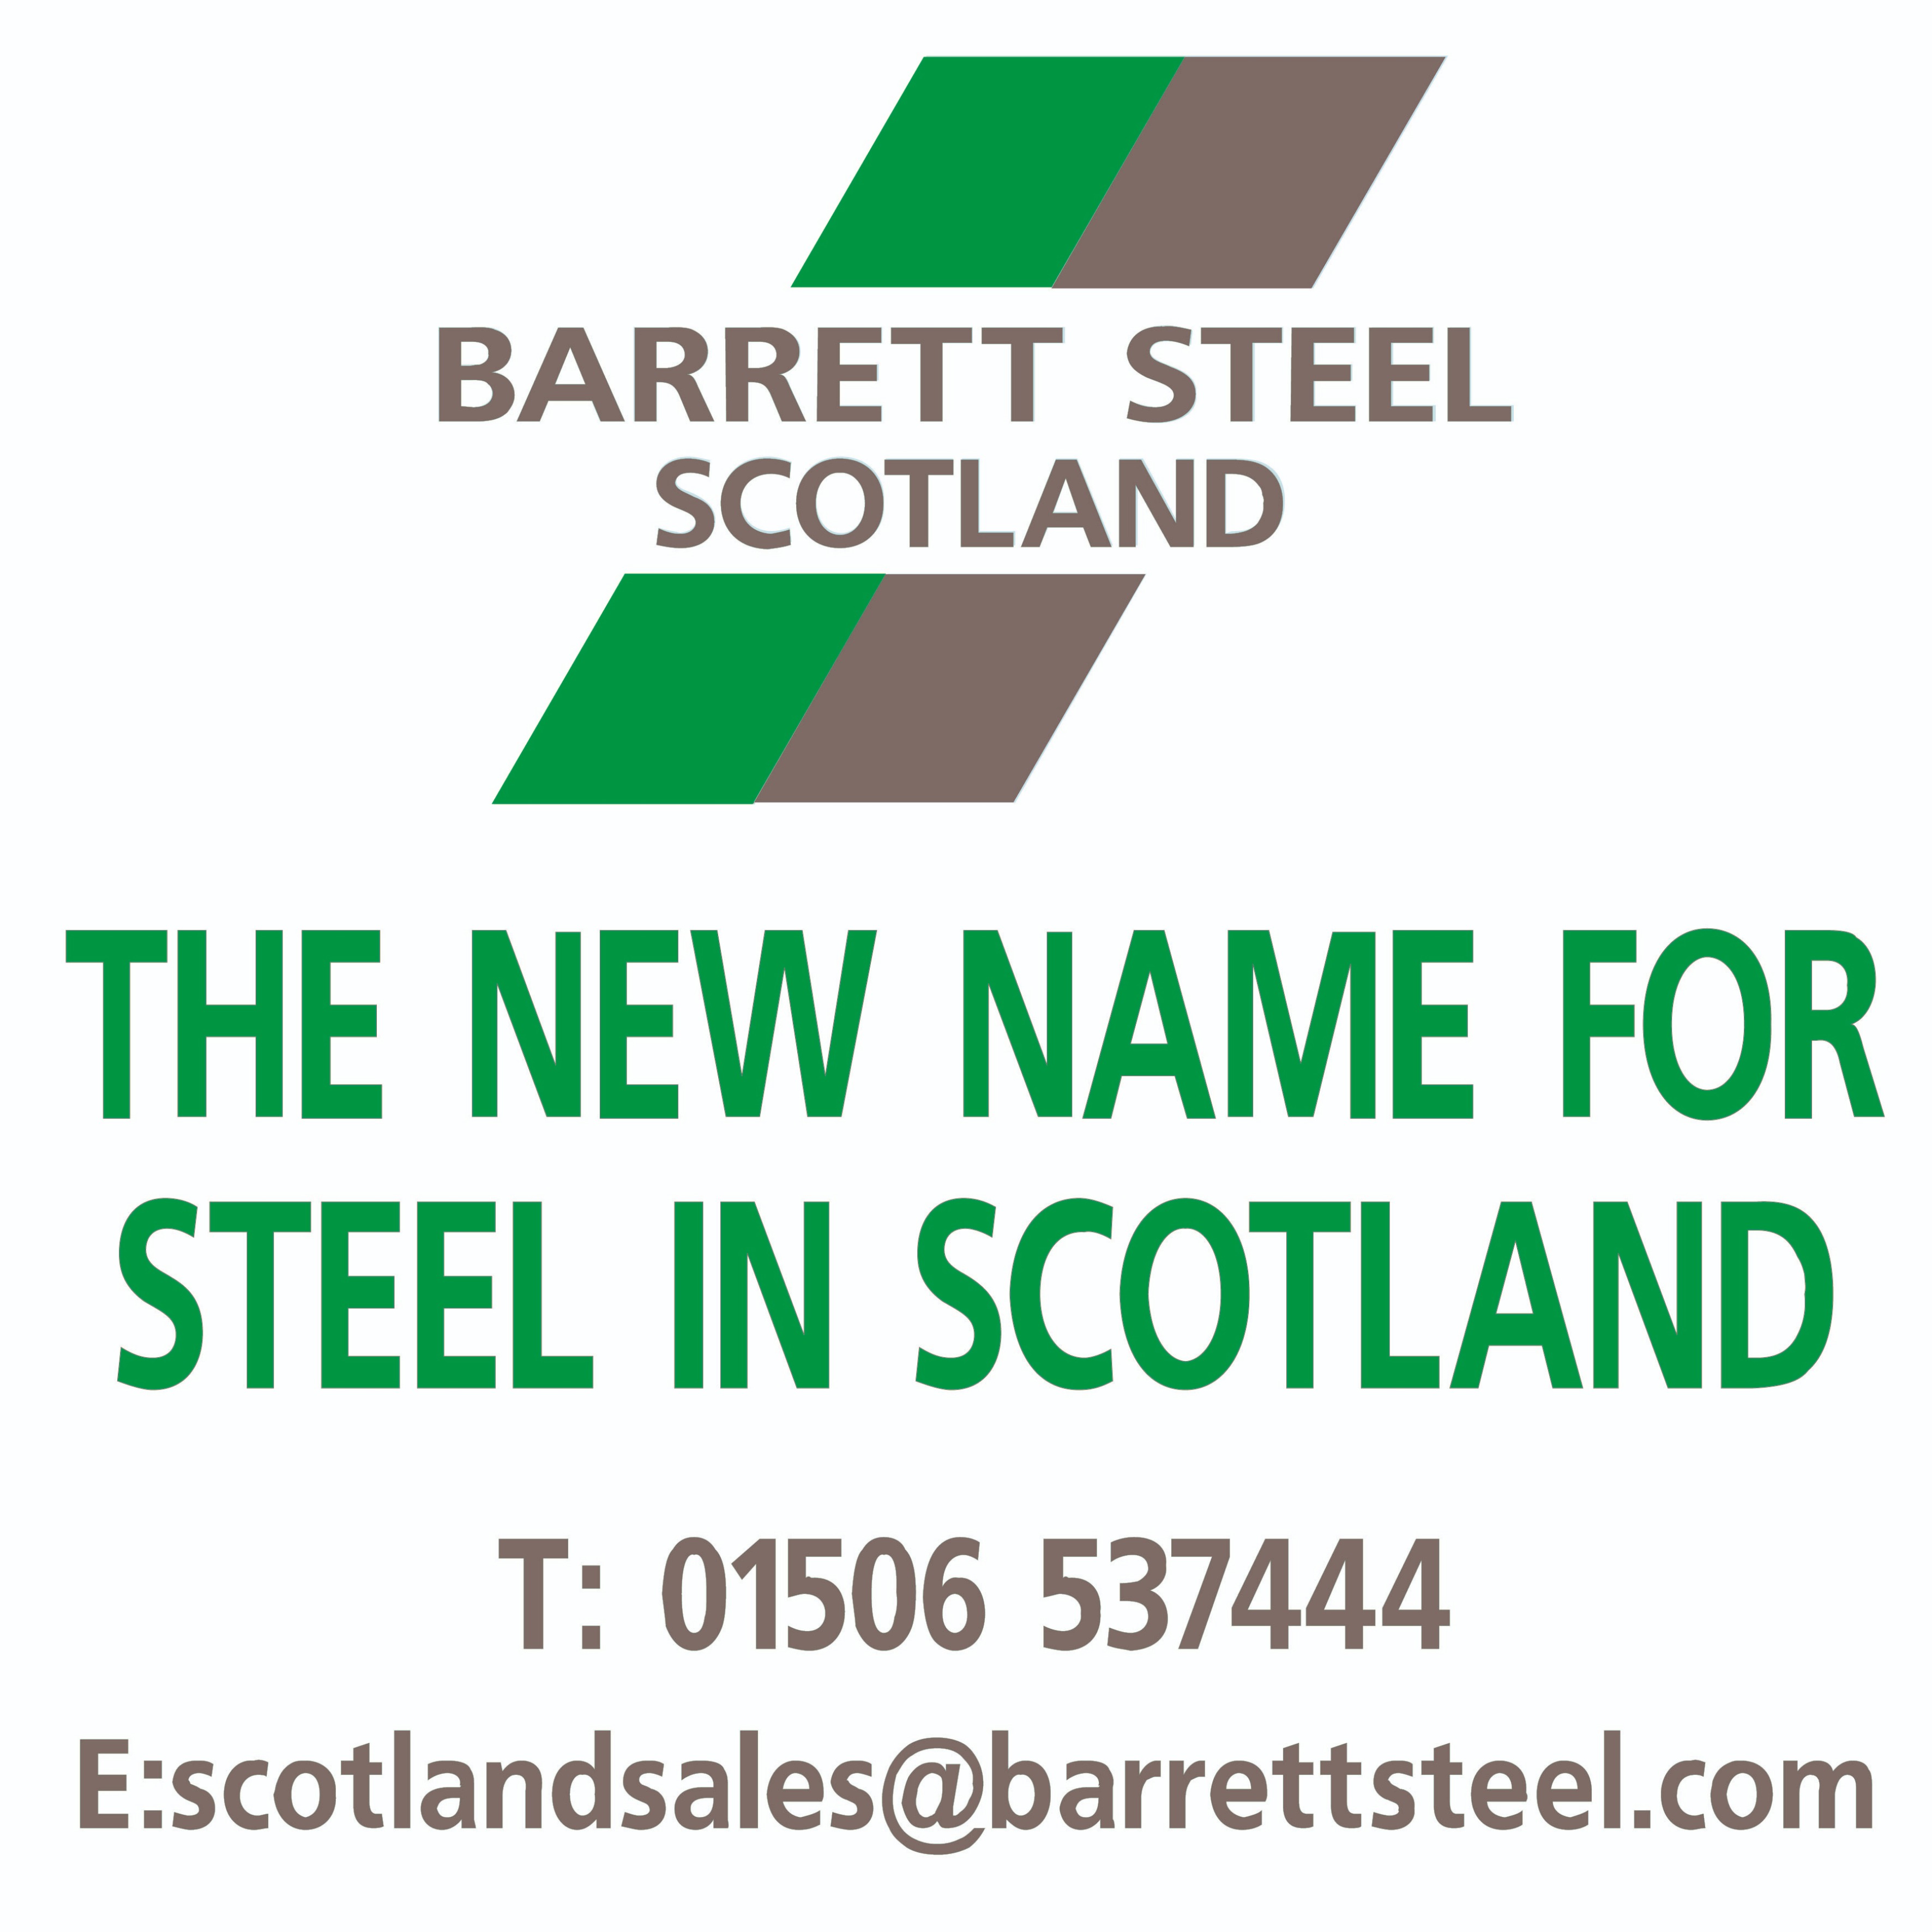 SPONSORS OF THE 10TH TEE - https://www.barrettsteel.com/depot-network/divisions/barrett-steel-scotland-newbridge/